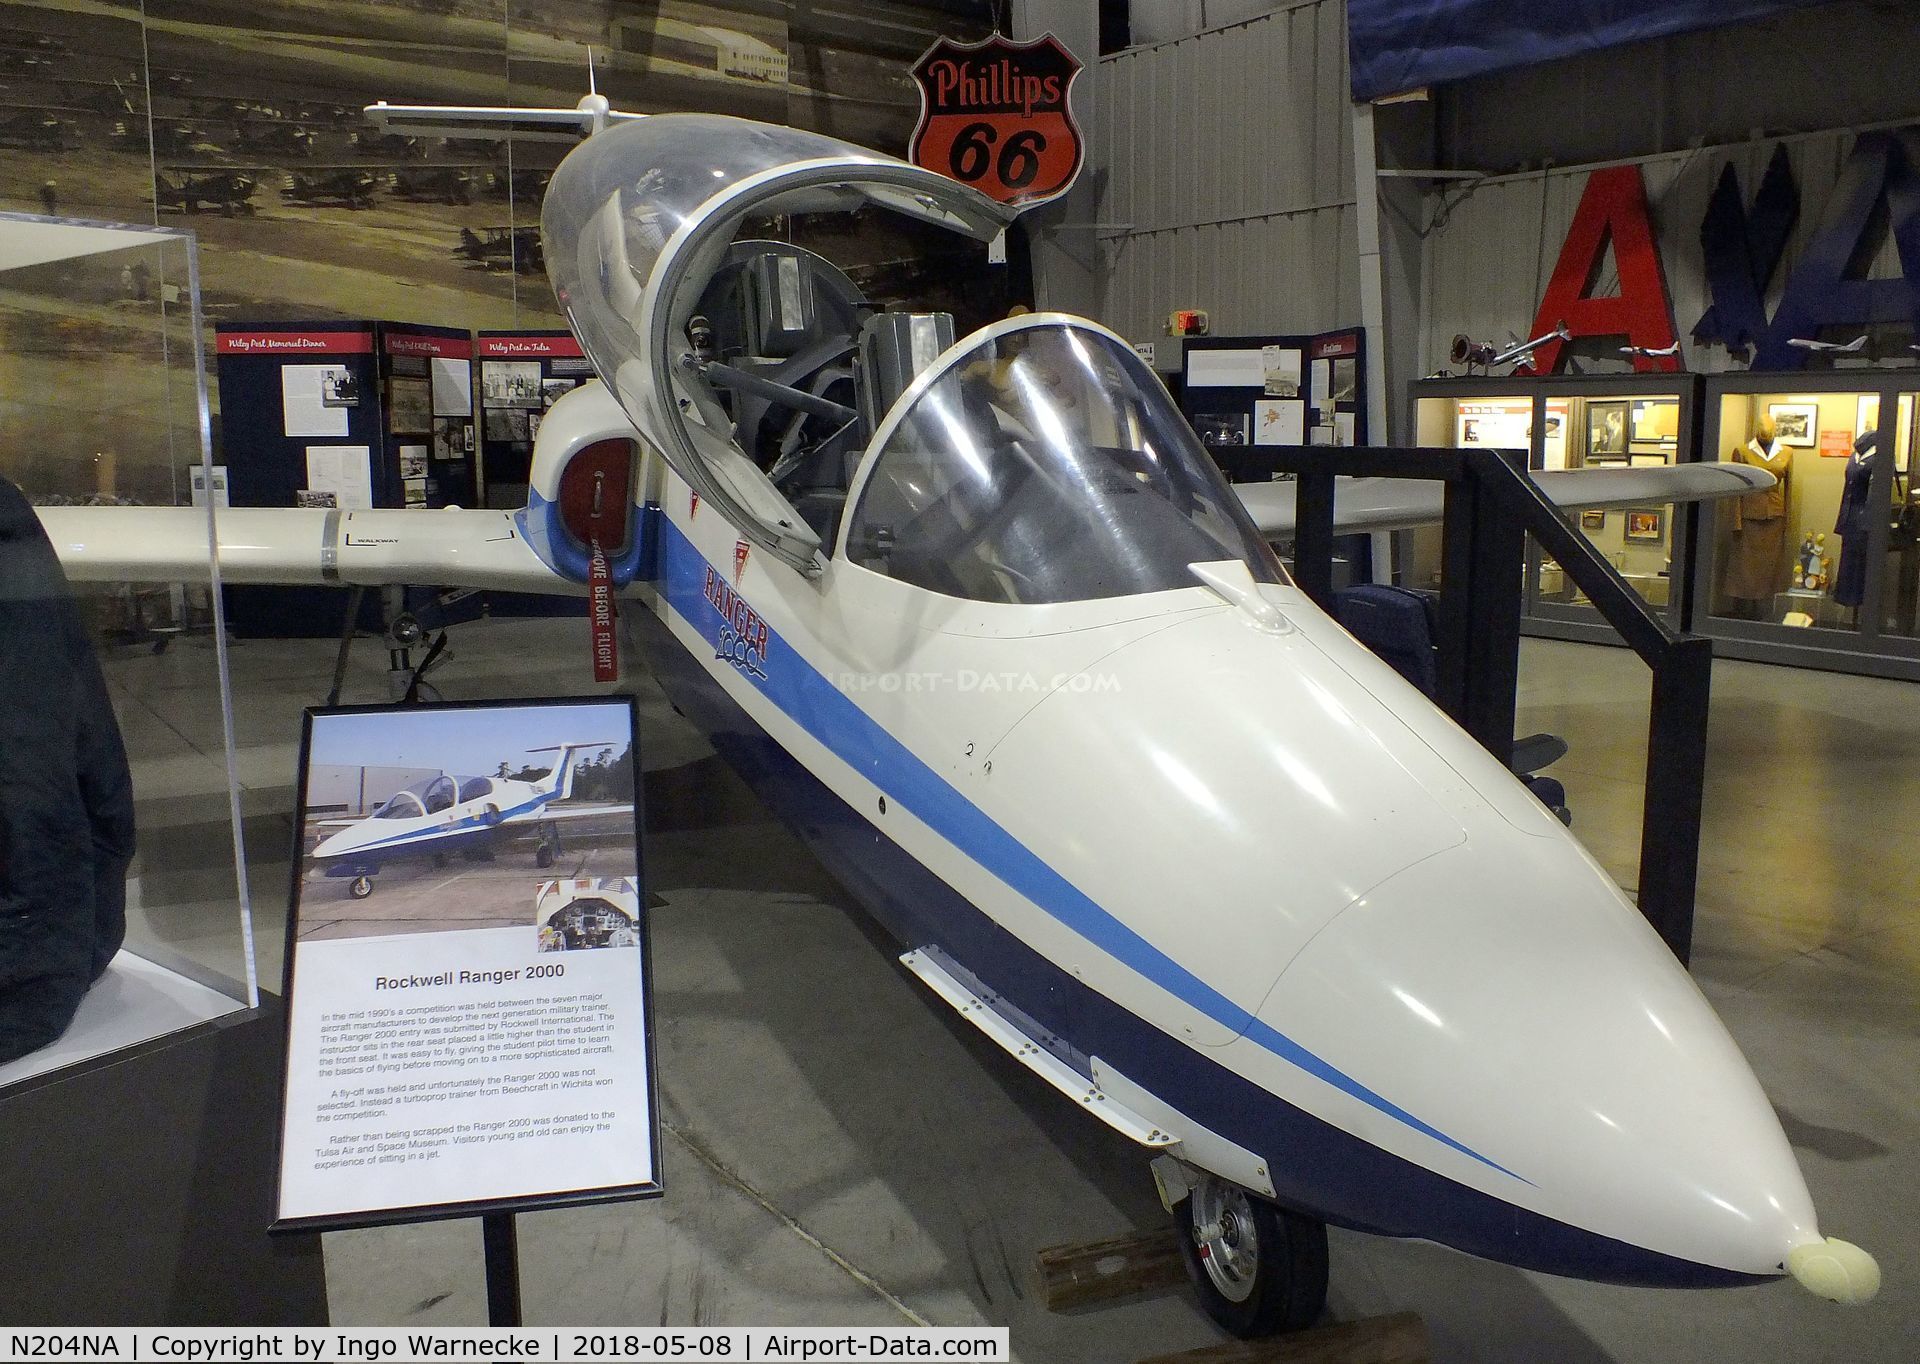 N204NA, 1994 Deutsch Aerospace Ag FR-06 C/N RP 03, RFB / Deutsche Aerospace / Rockwell Fanranger / FR-06 Ranger 2000 at the Tulsa Air and Space Museum, Tulsa OK